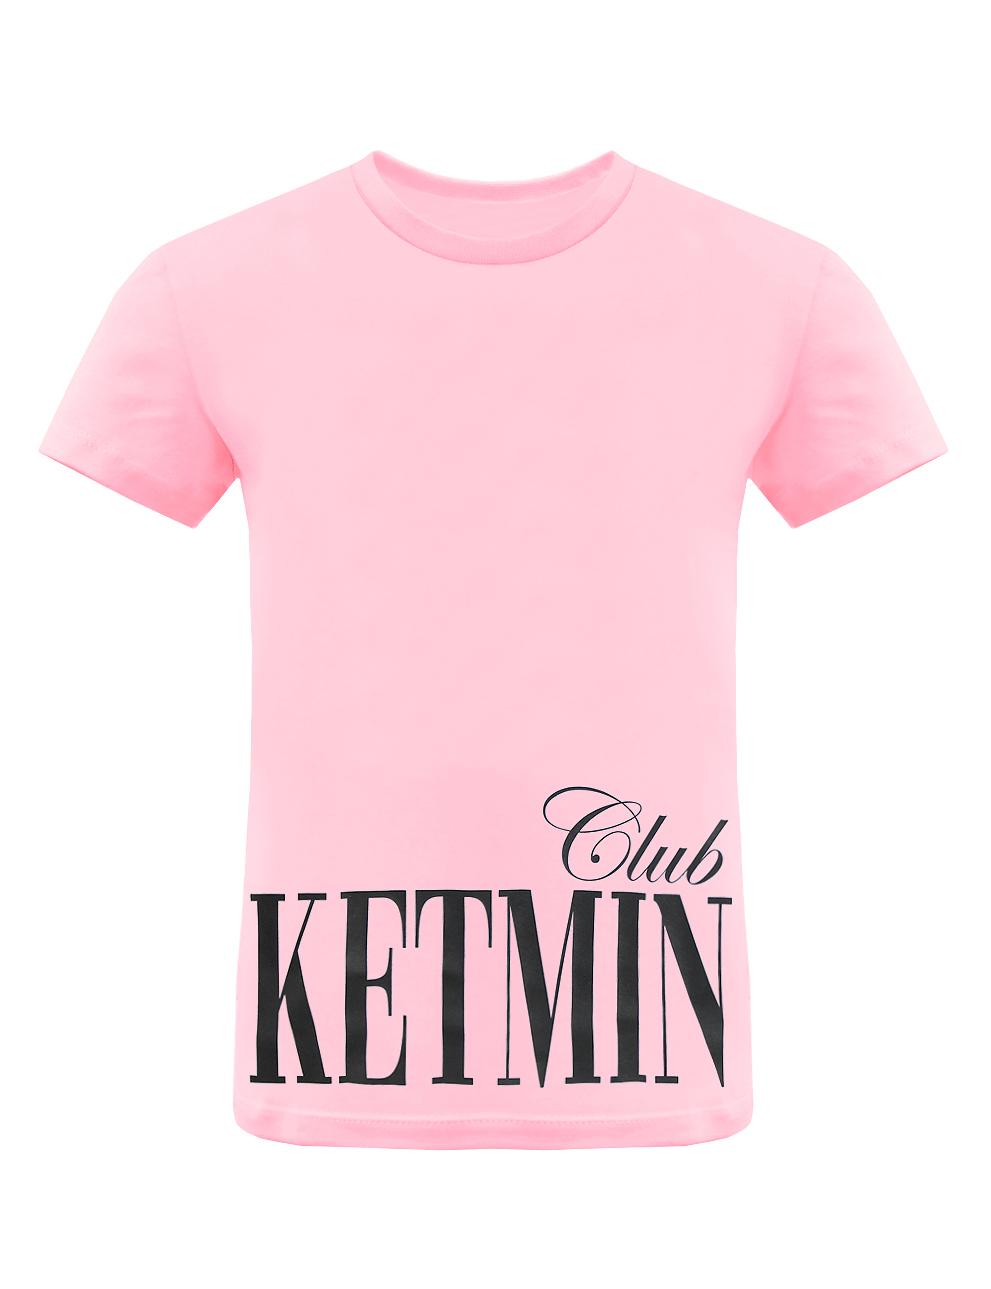 Футболка для девочки KETMIN CLUB цв.Розовый